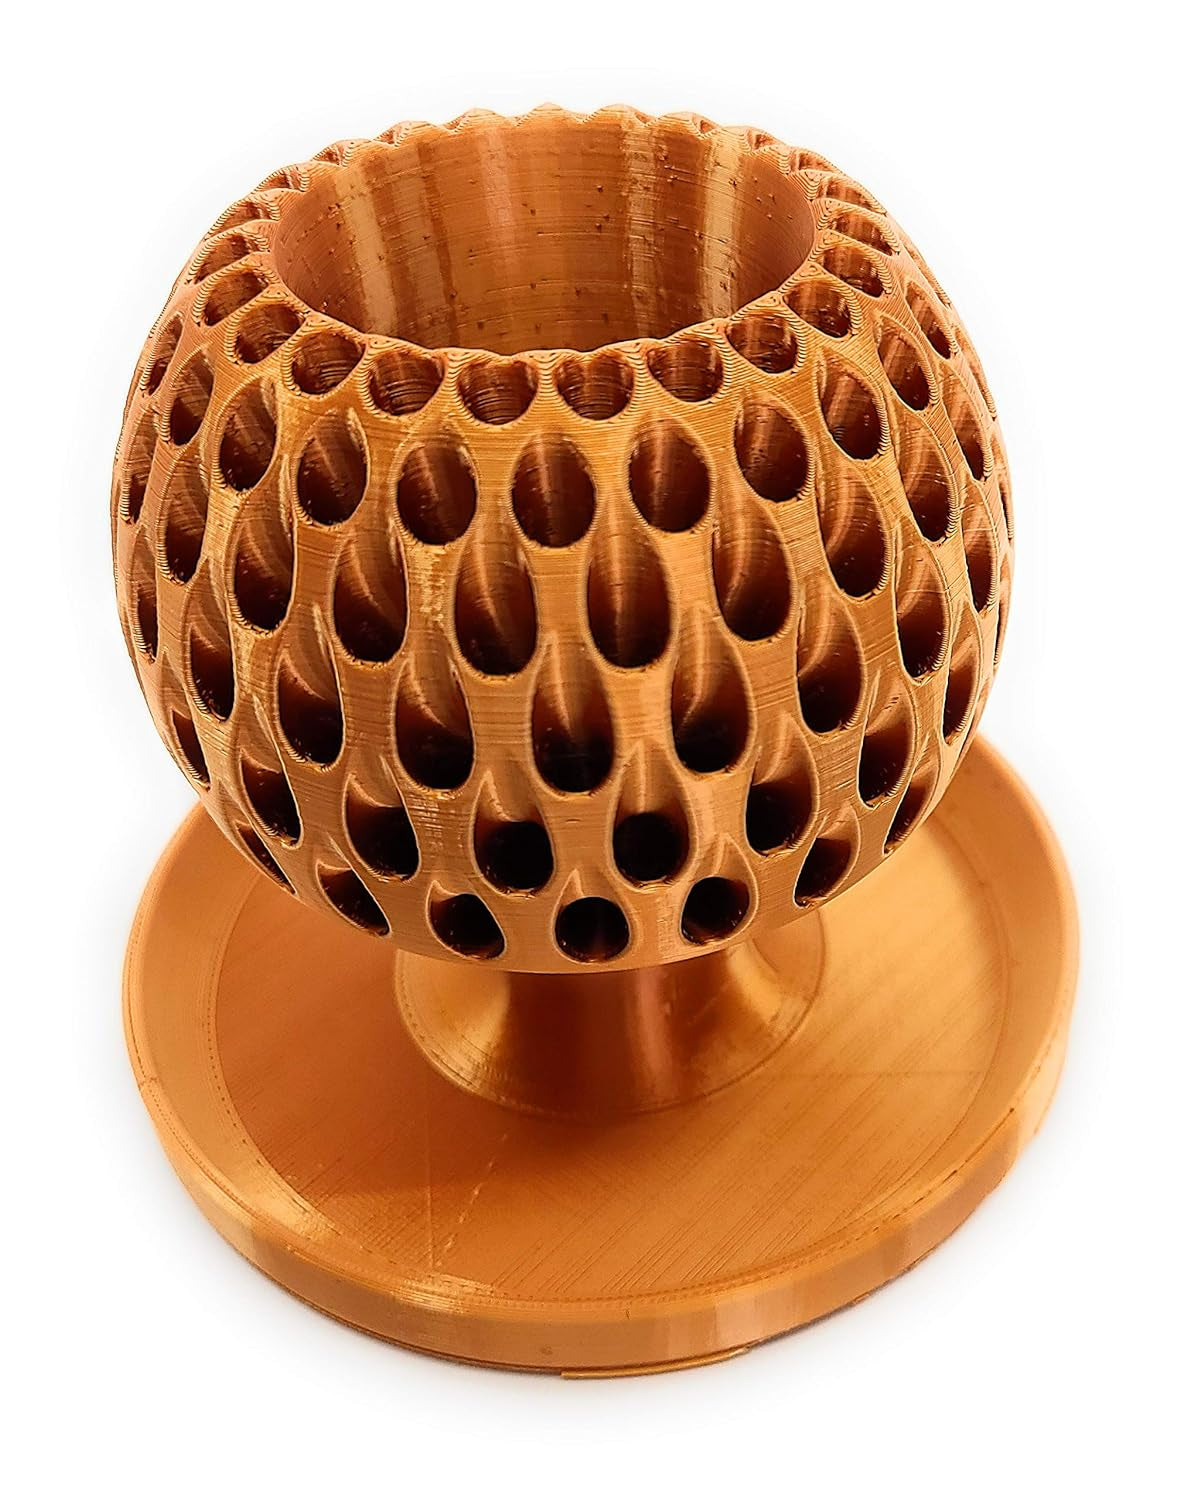 3D Printed Paint Brush Holder - Artificial Flower Vase - Copper Color